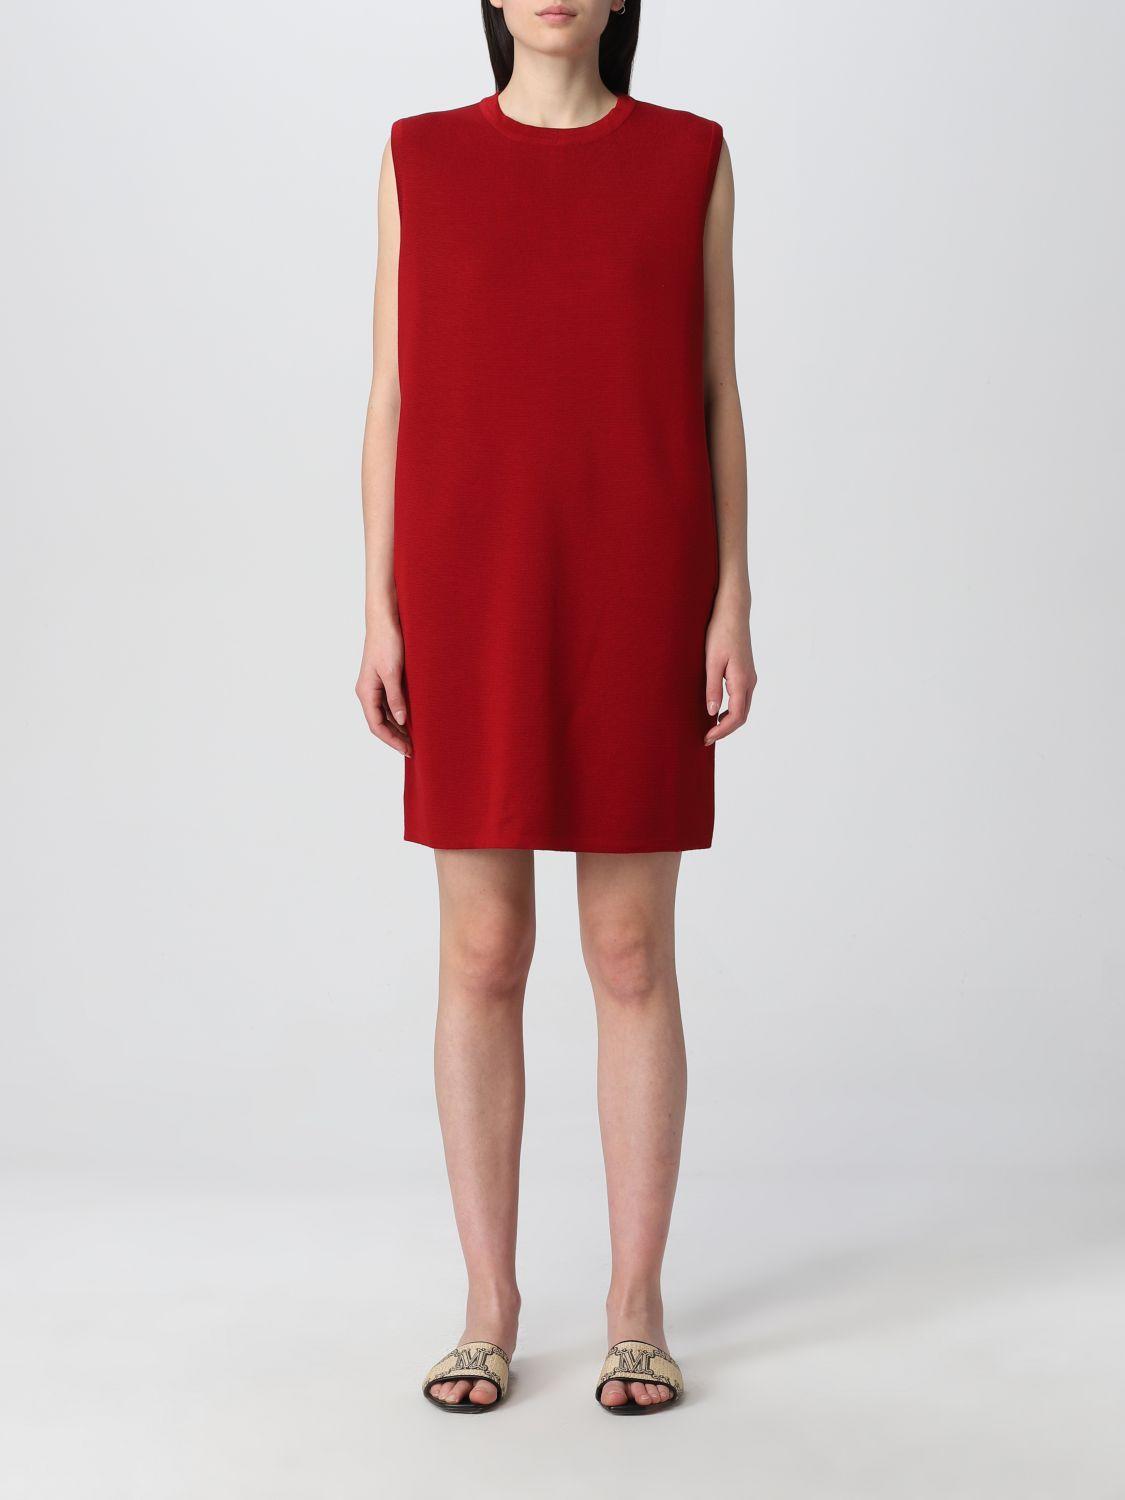 Max Mara Virgin Wool Short Dress in Red | Lyst